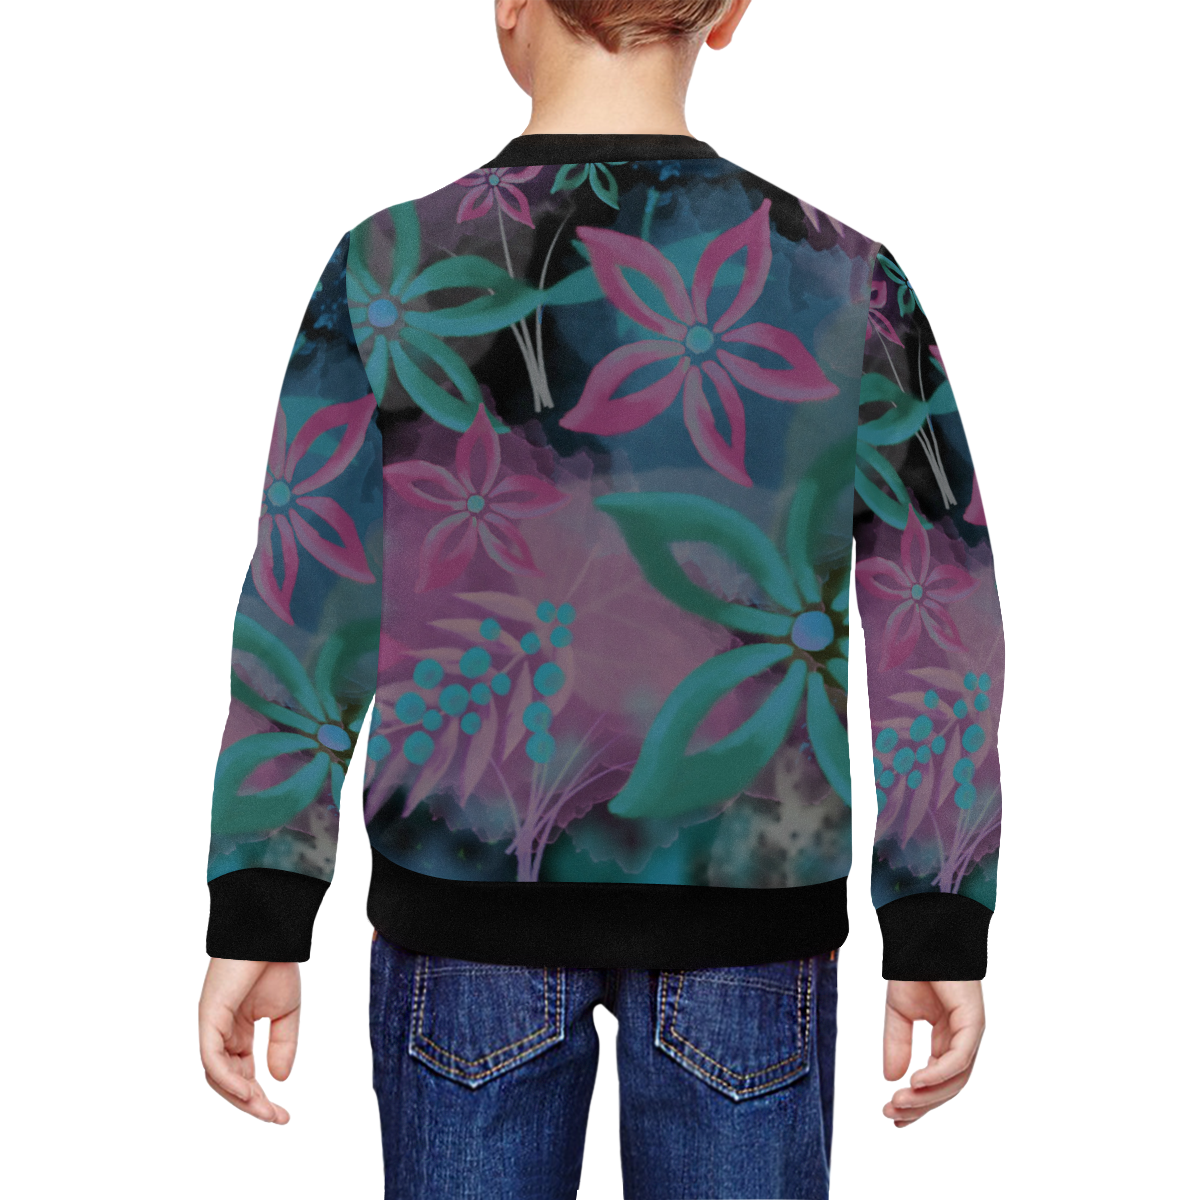 Flower Pattern - black, teal green, purple, pink All Over Print Crewneck Sweatshirt for Kids (Model H29)